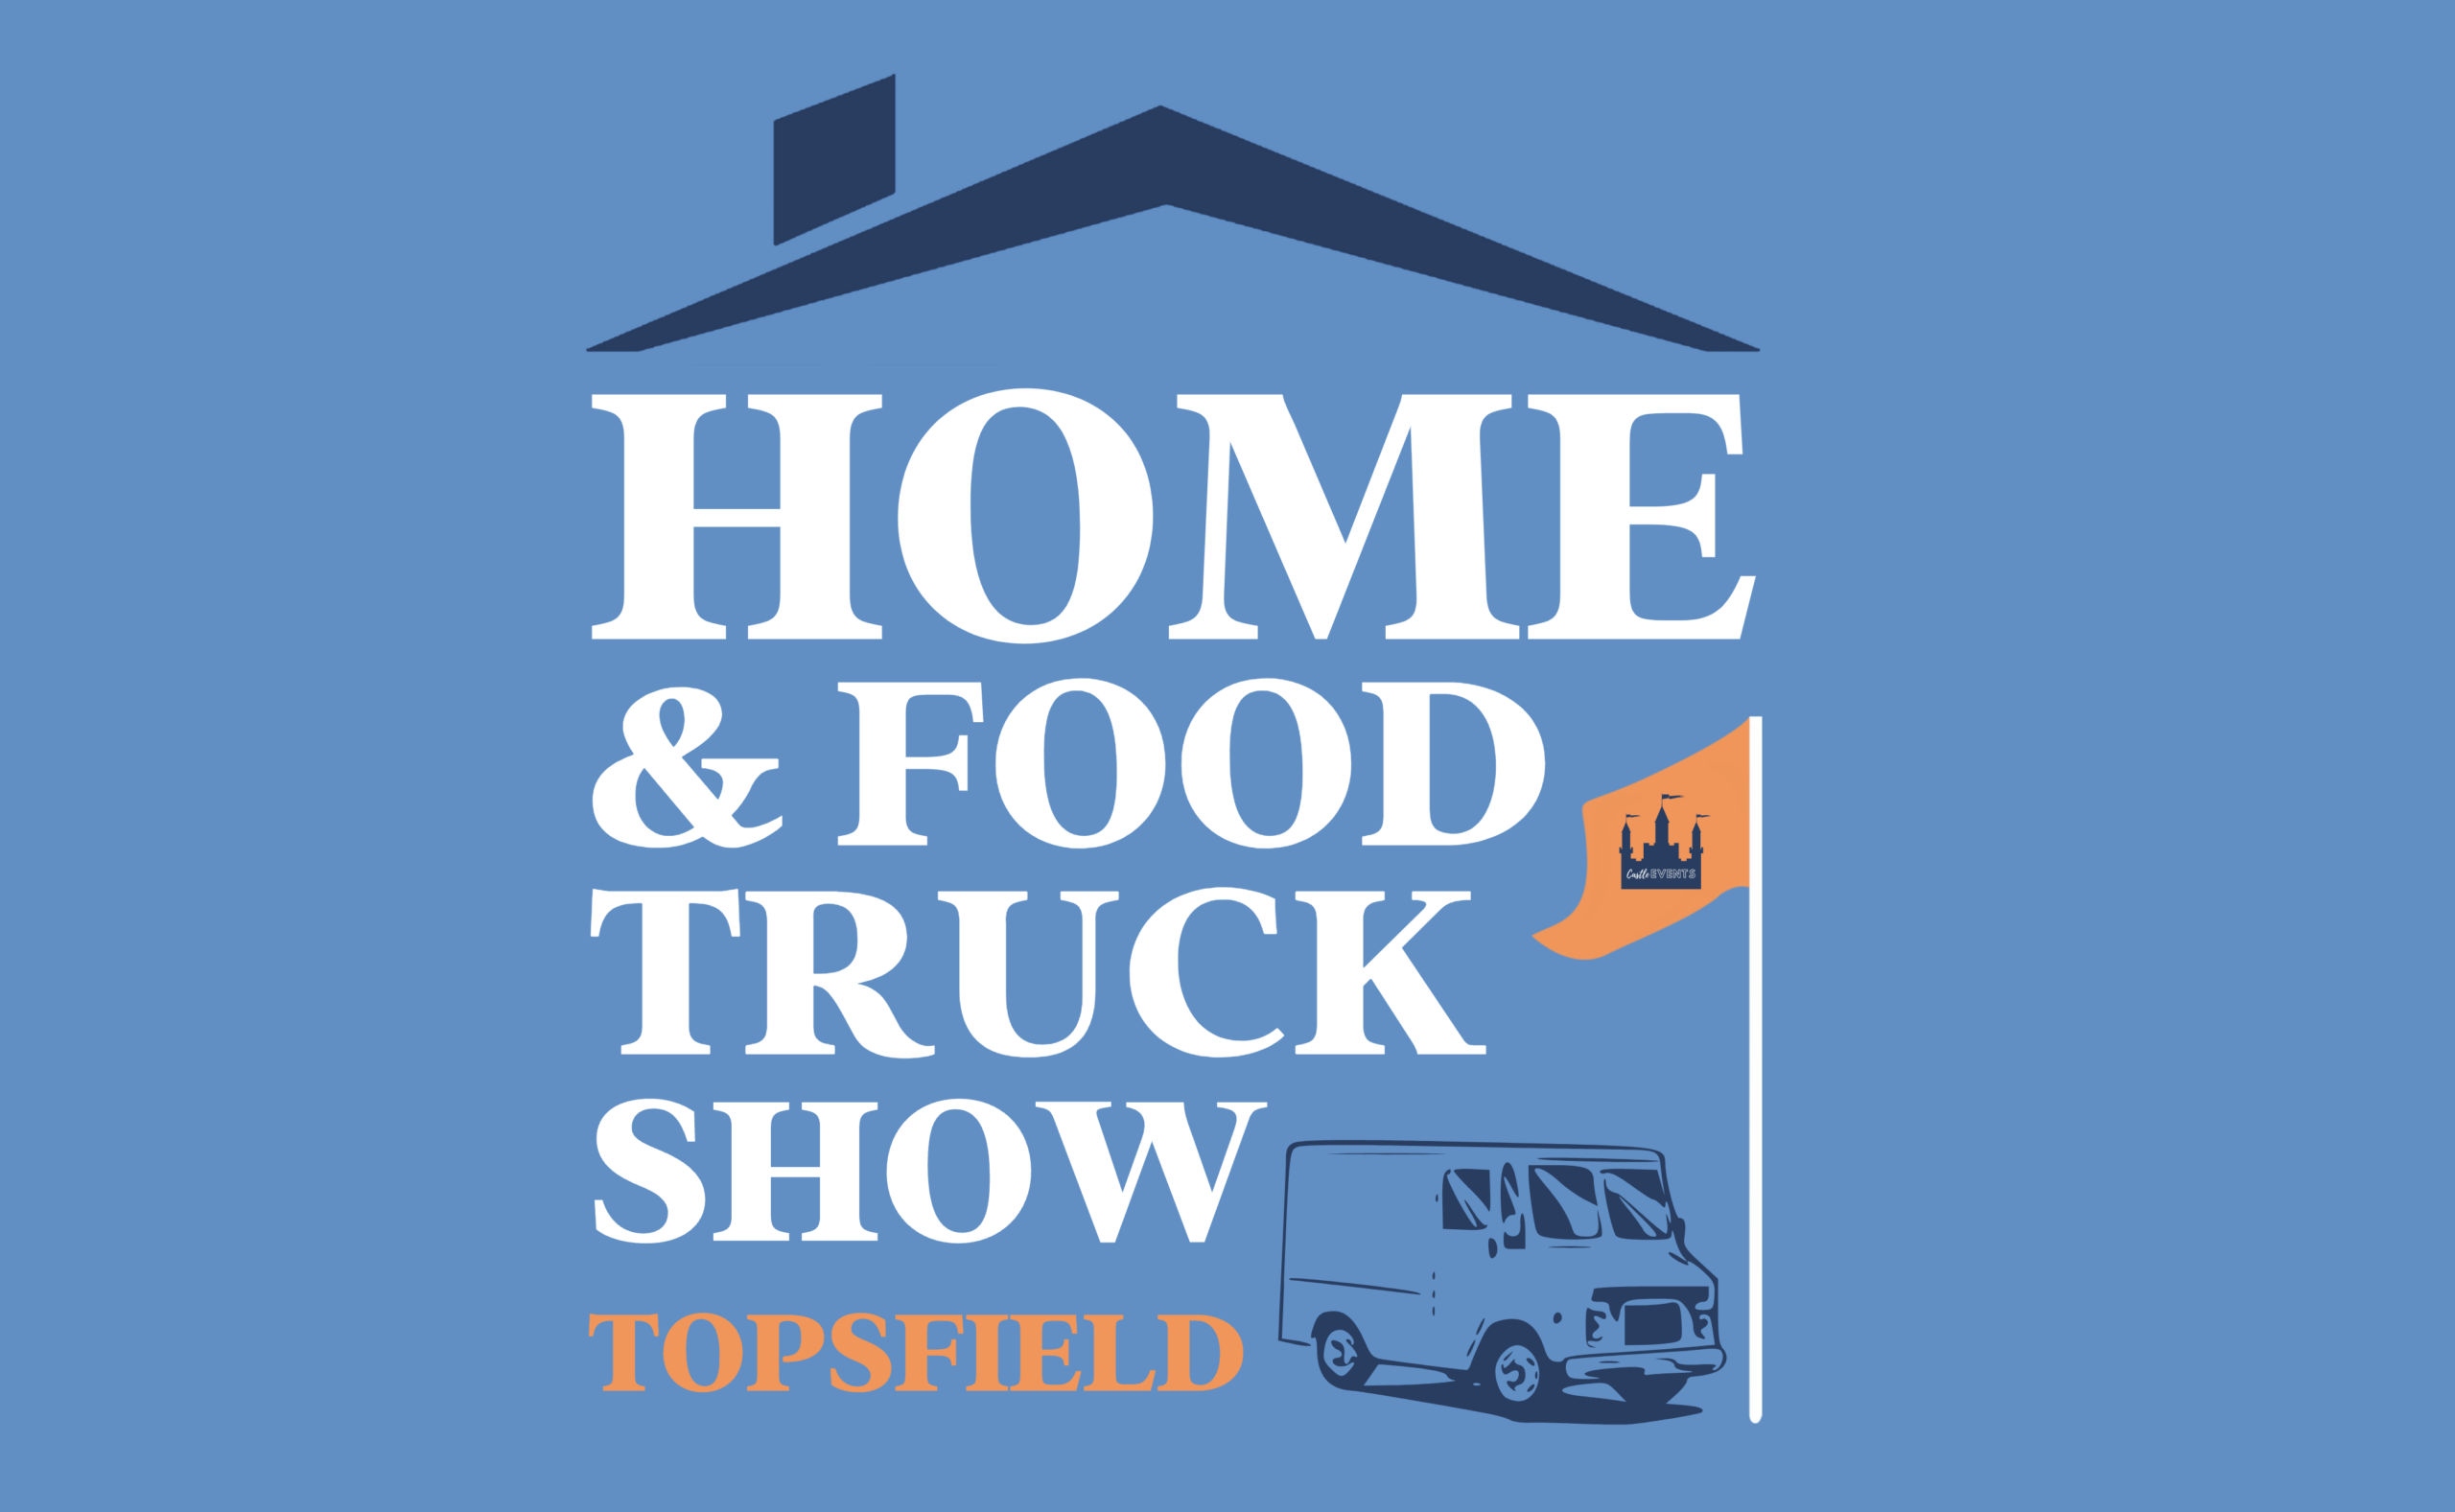 Topsfield home food truck show